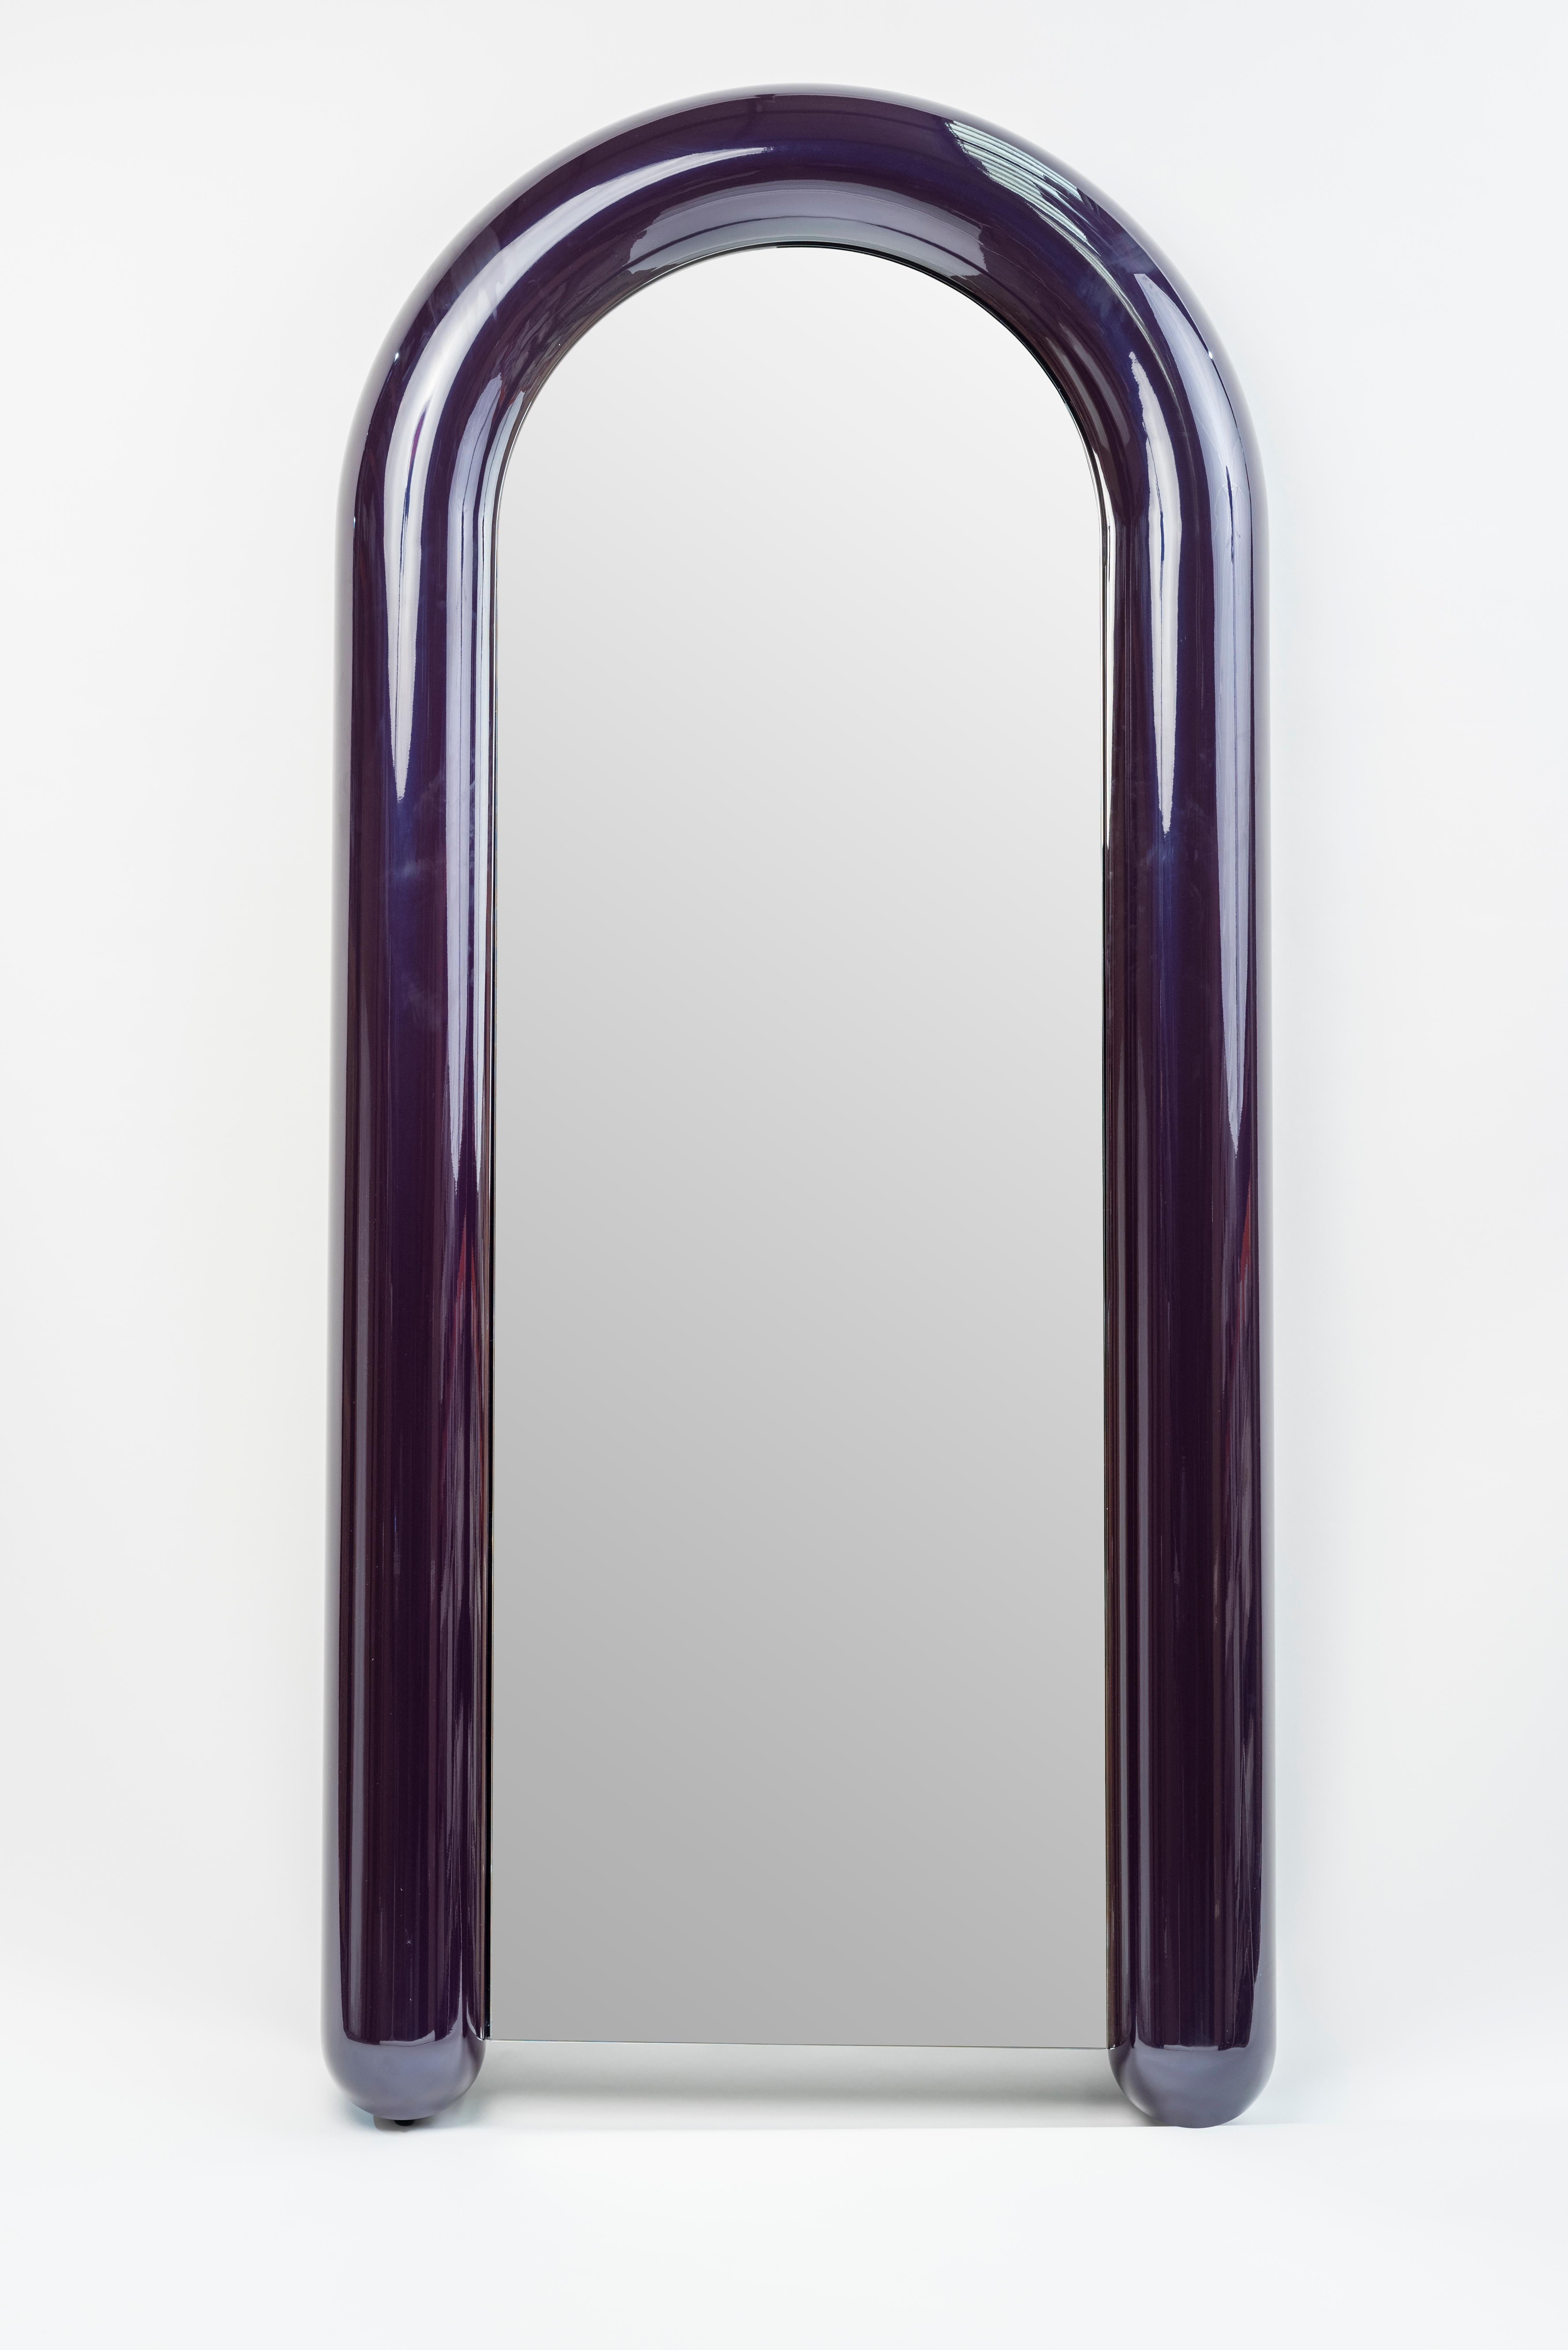 Contemporary La Manufacture-Paris Soufflé Mirror Designed by Luca Nichetto For Sale